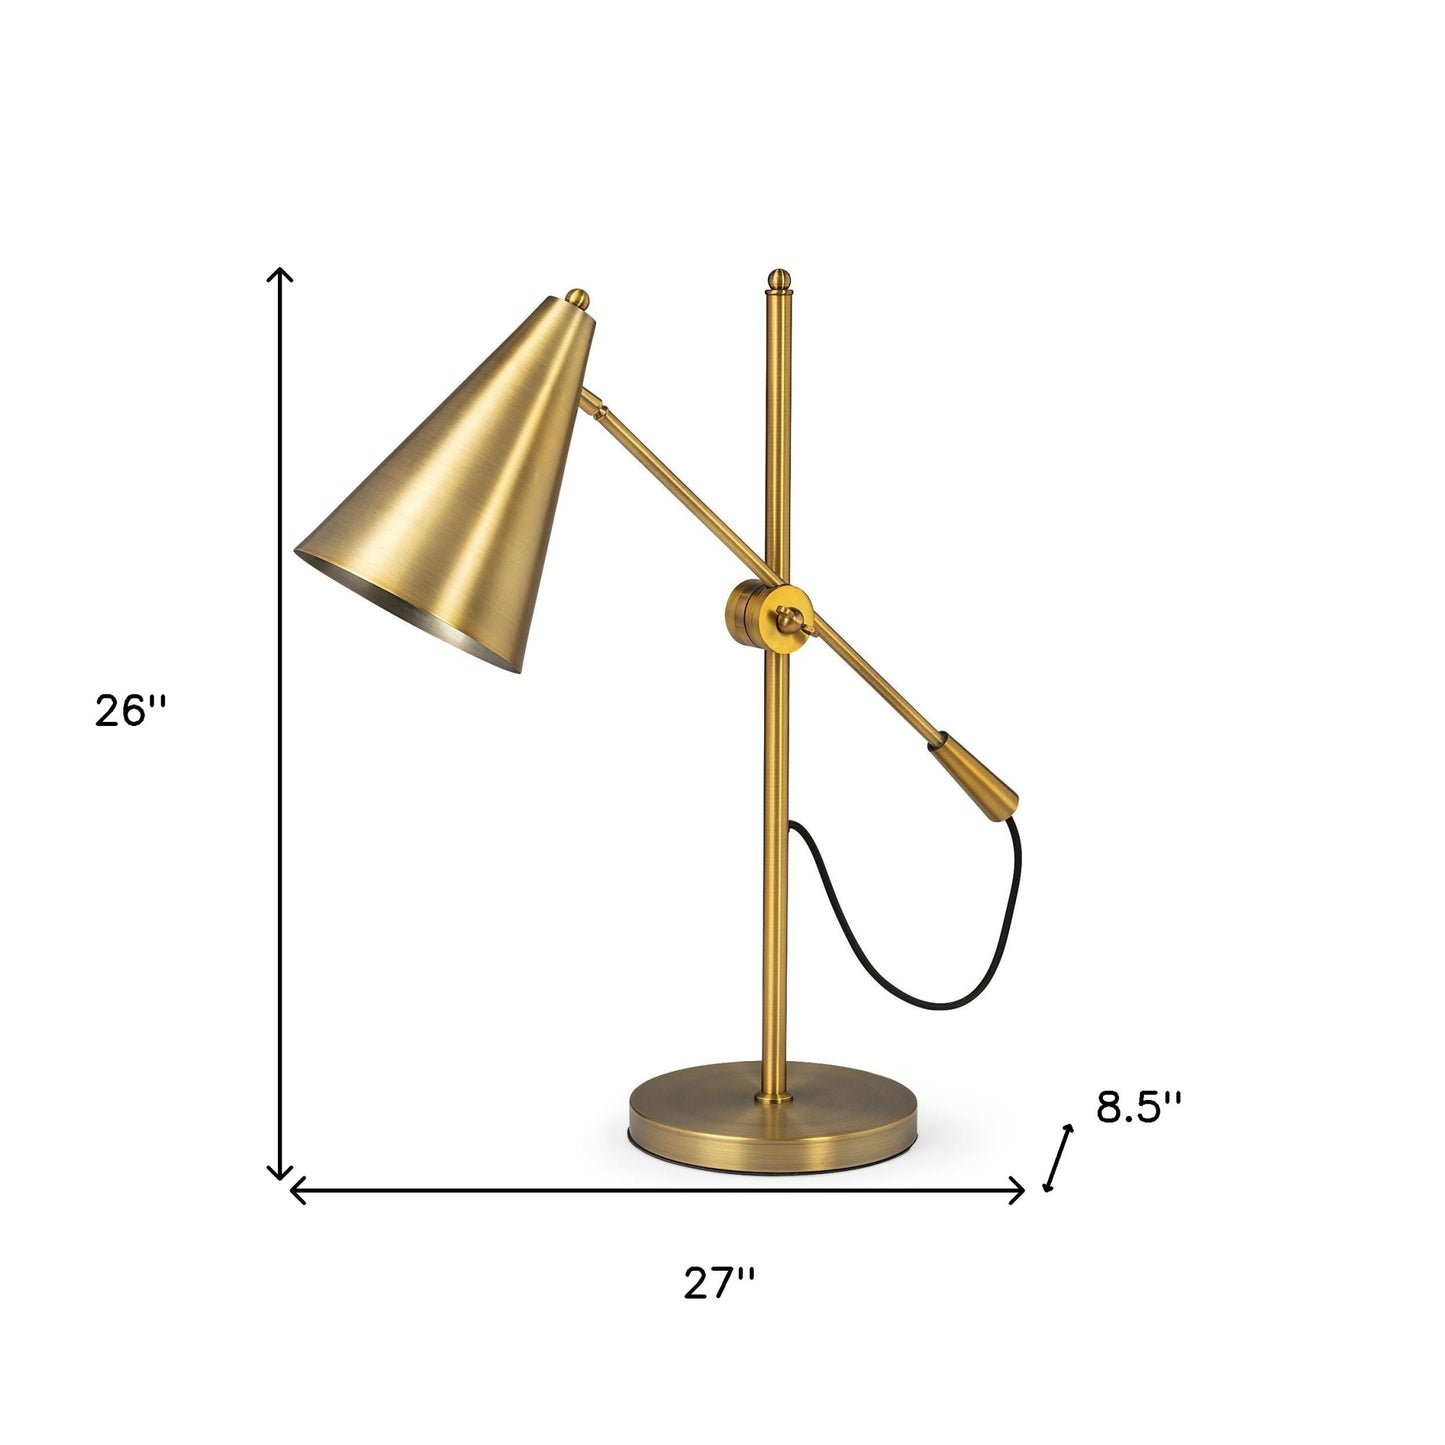 Sleek Golden Cone Adjustable Table Or Desk Lamp